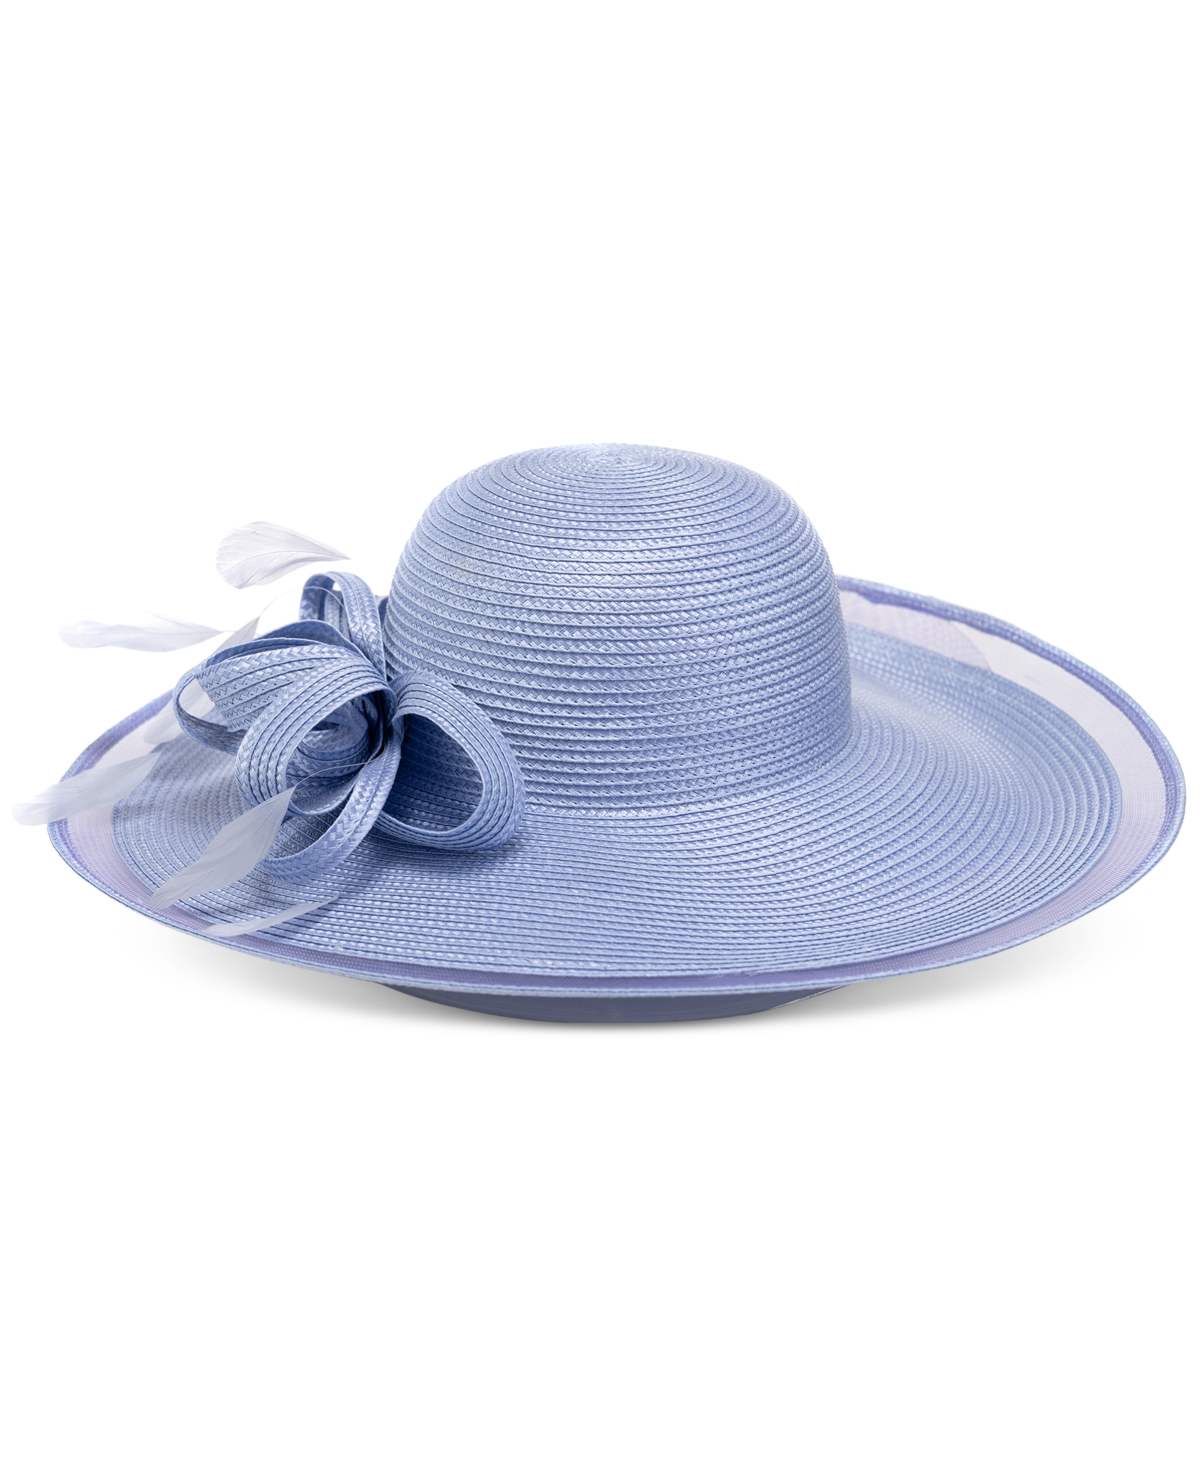 Women's Sheer Ruffled Brim Dressy Hat - Lilac